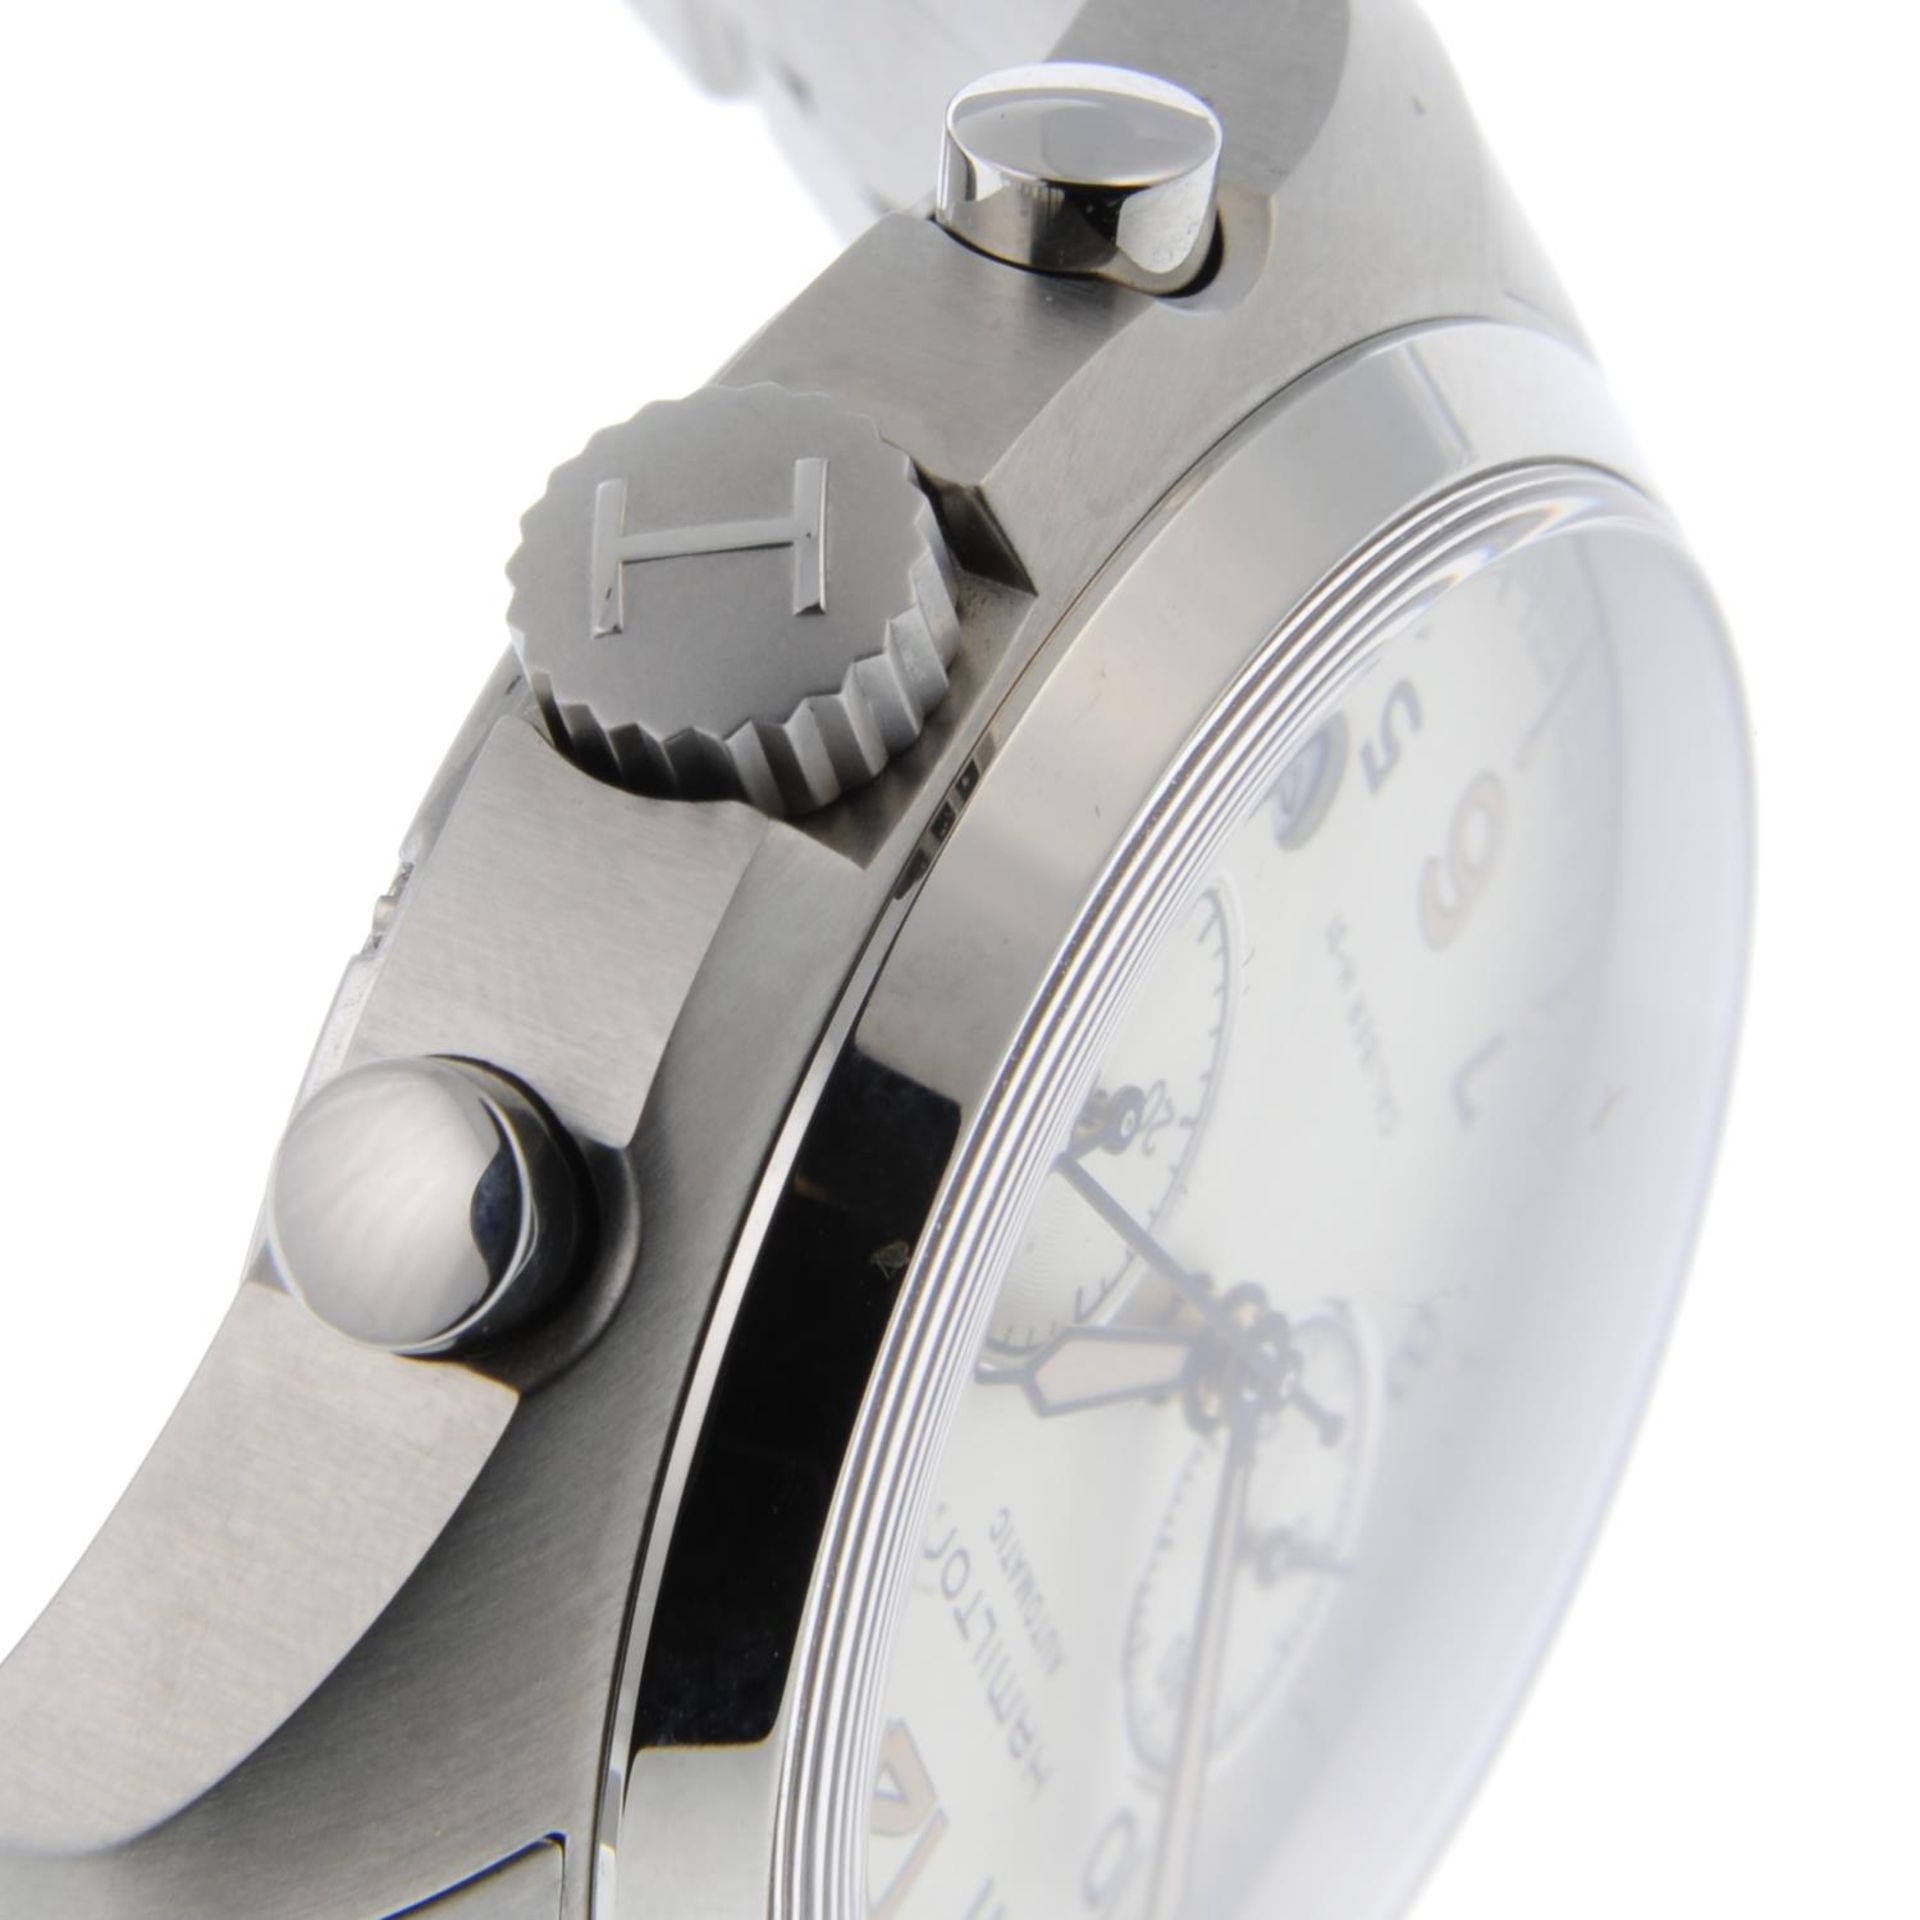 HAMILTON - a gentleman's Khaki Aviation Pilot Pioneer chronograph bracelet watch. - Image 4 of 4